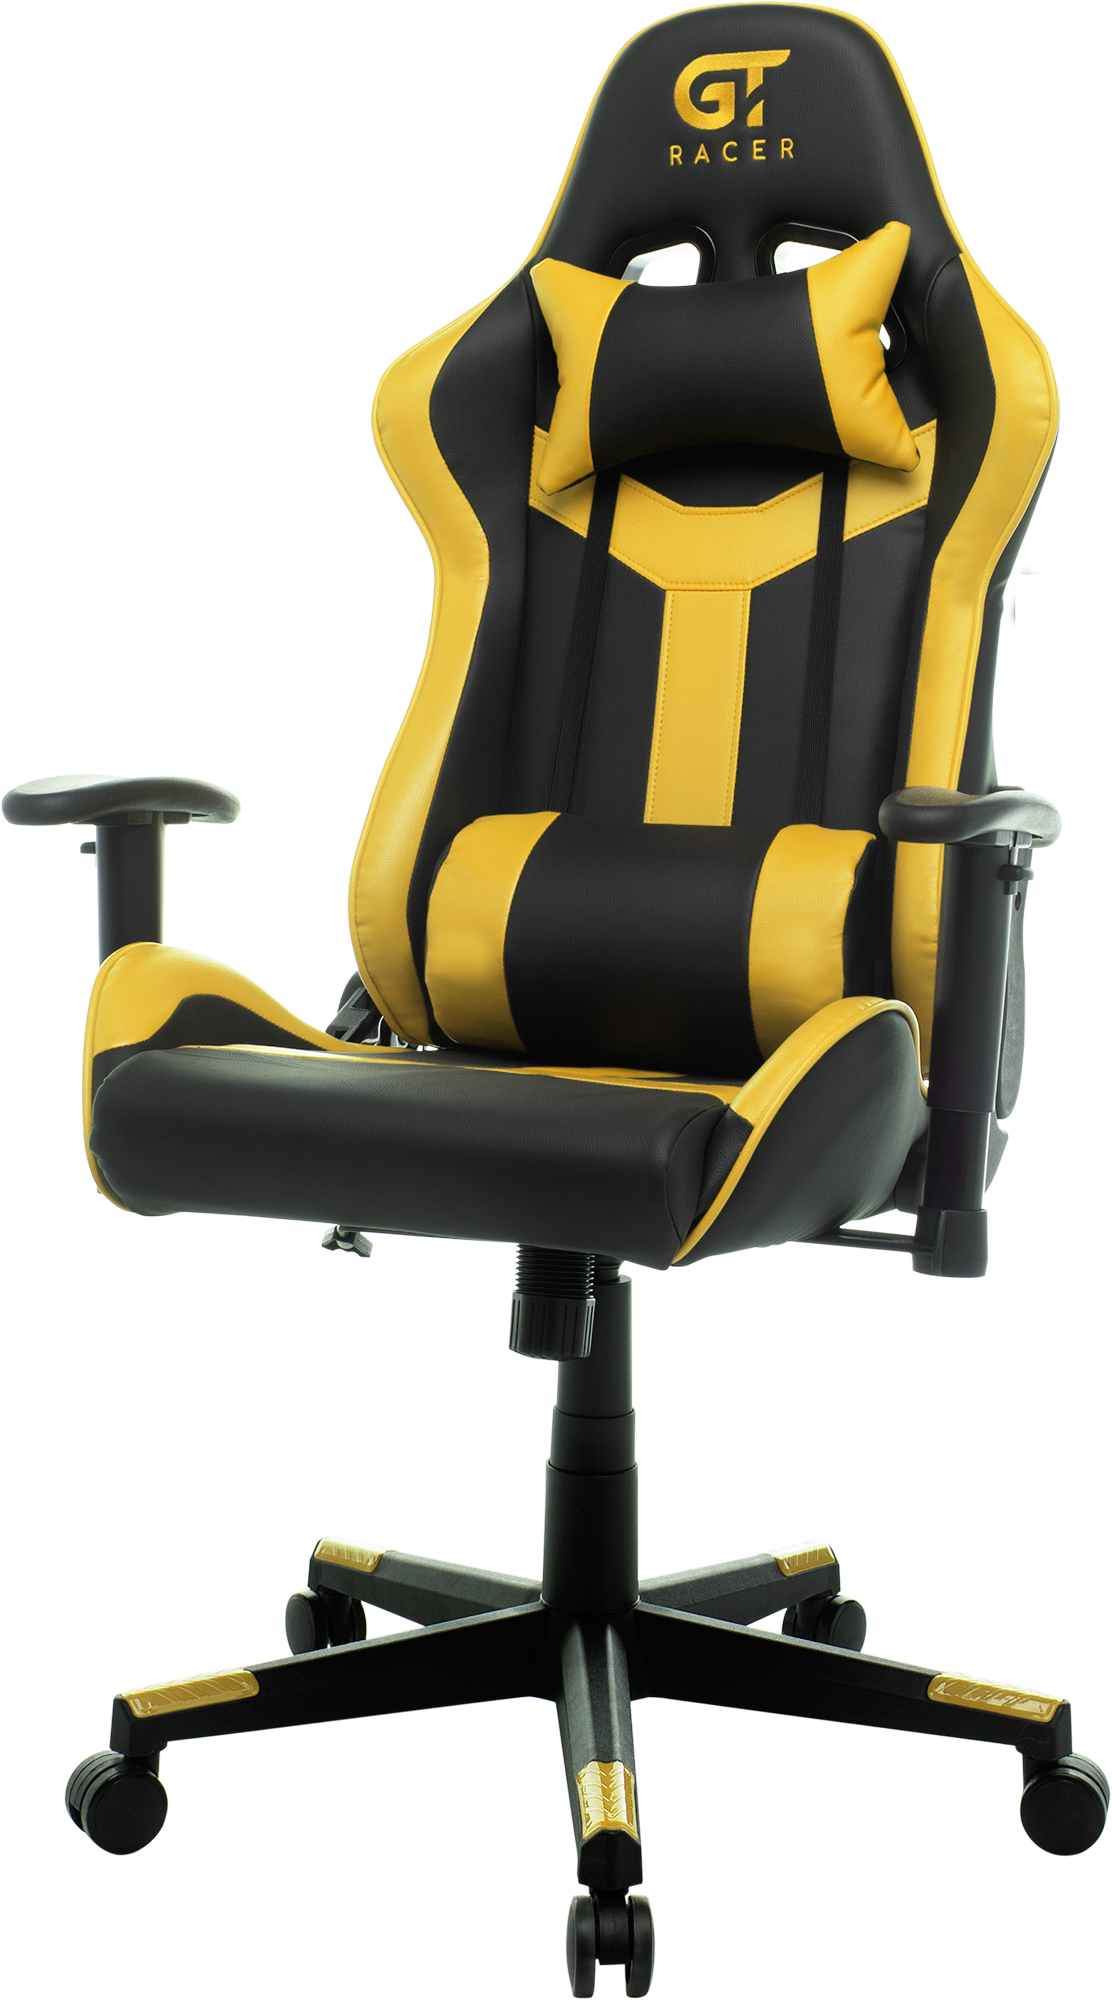 Геймерське крісло GT Racer чорне з жовтим (X-2527 Black/Yellow) - фото 4